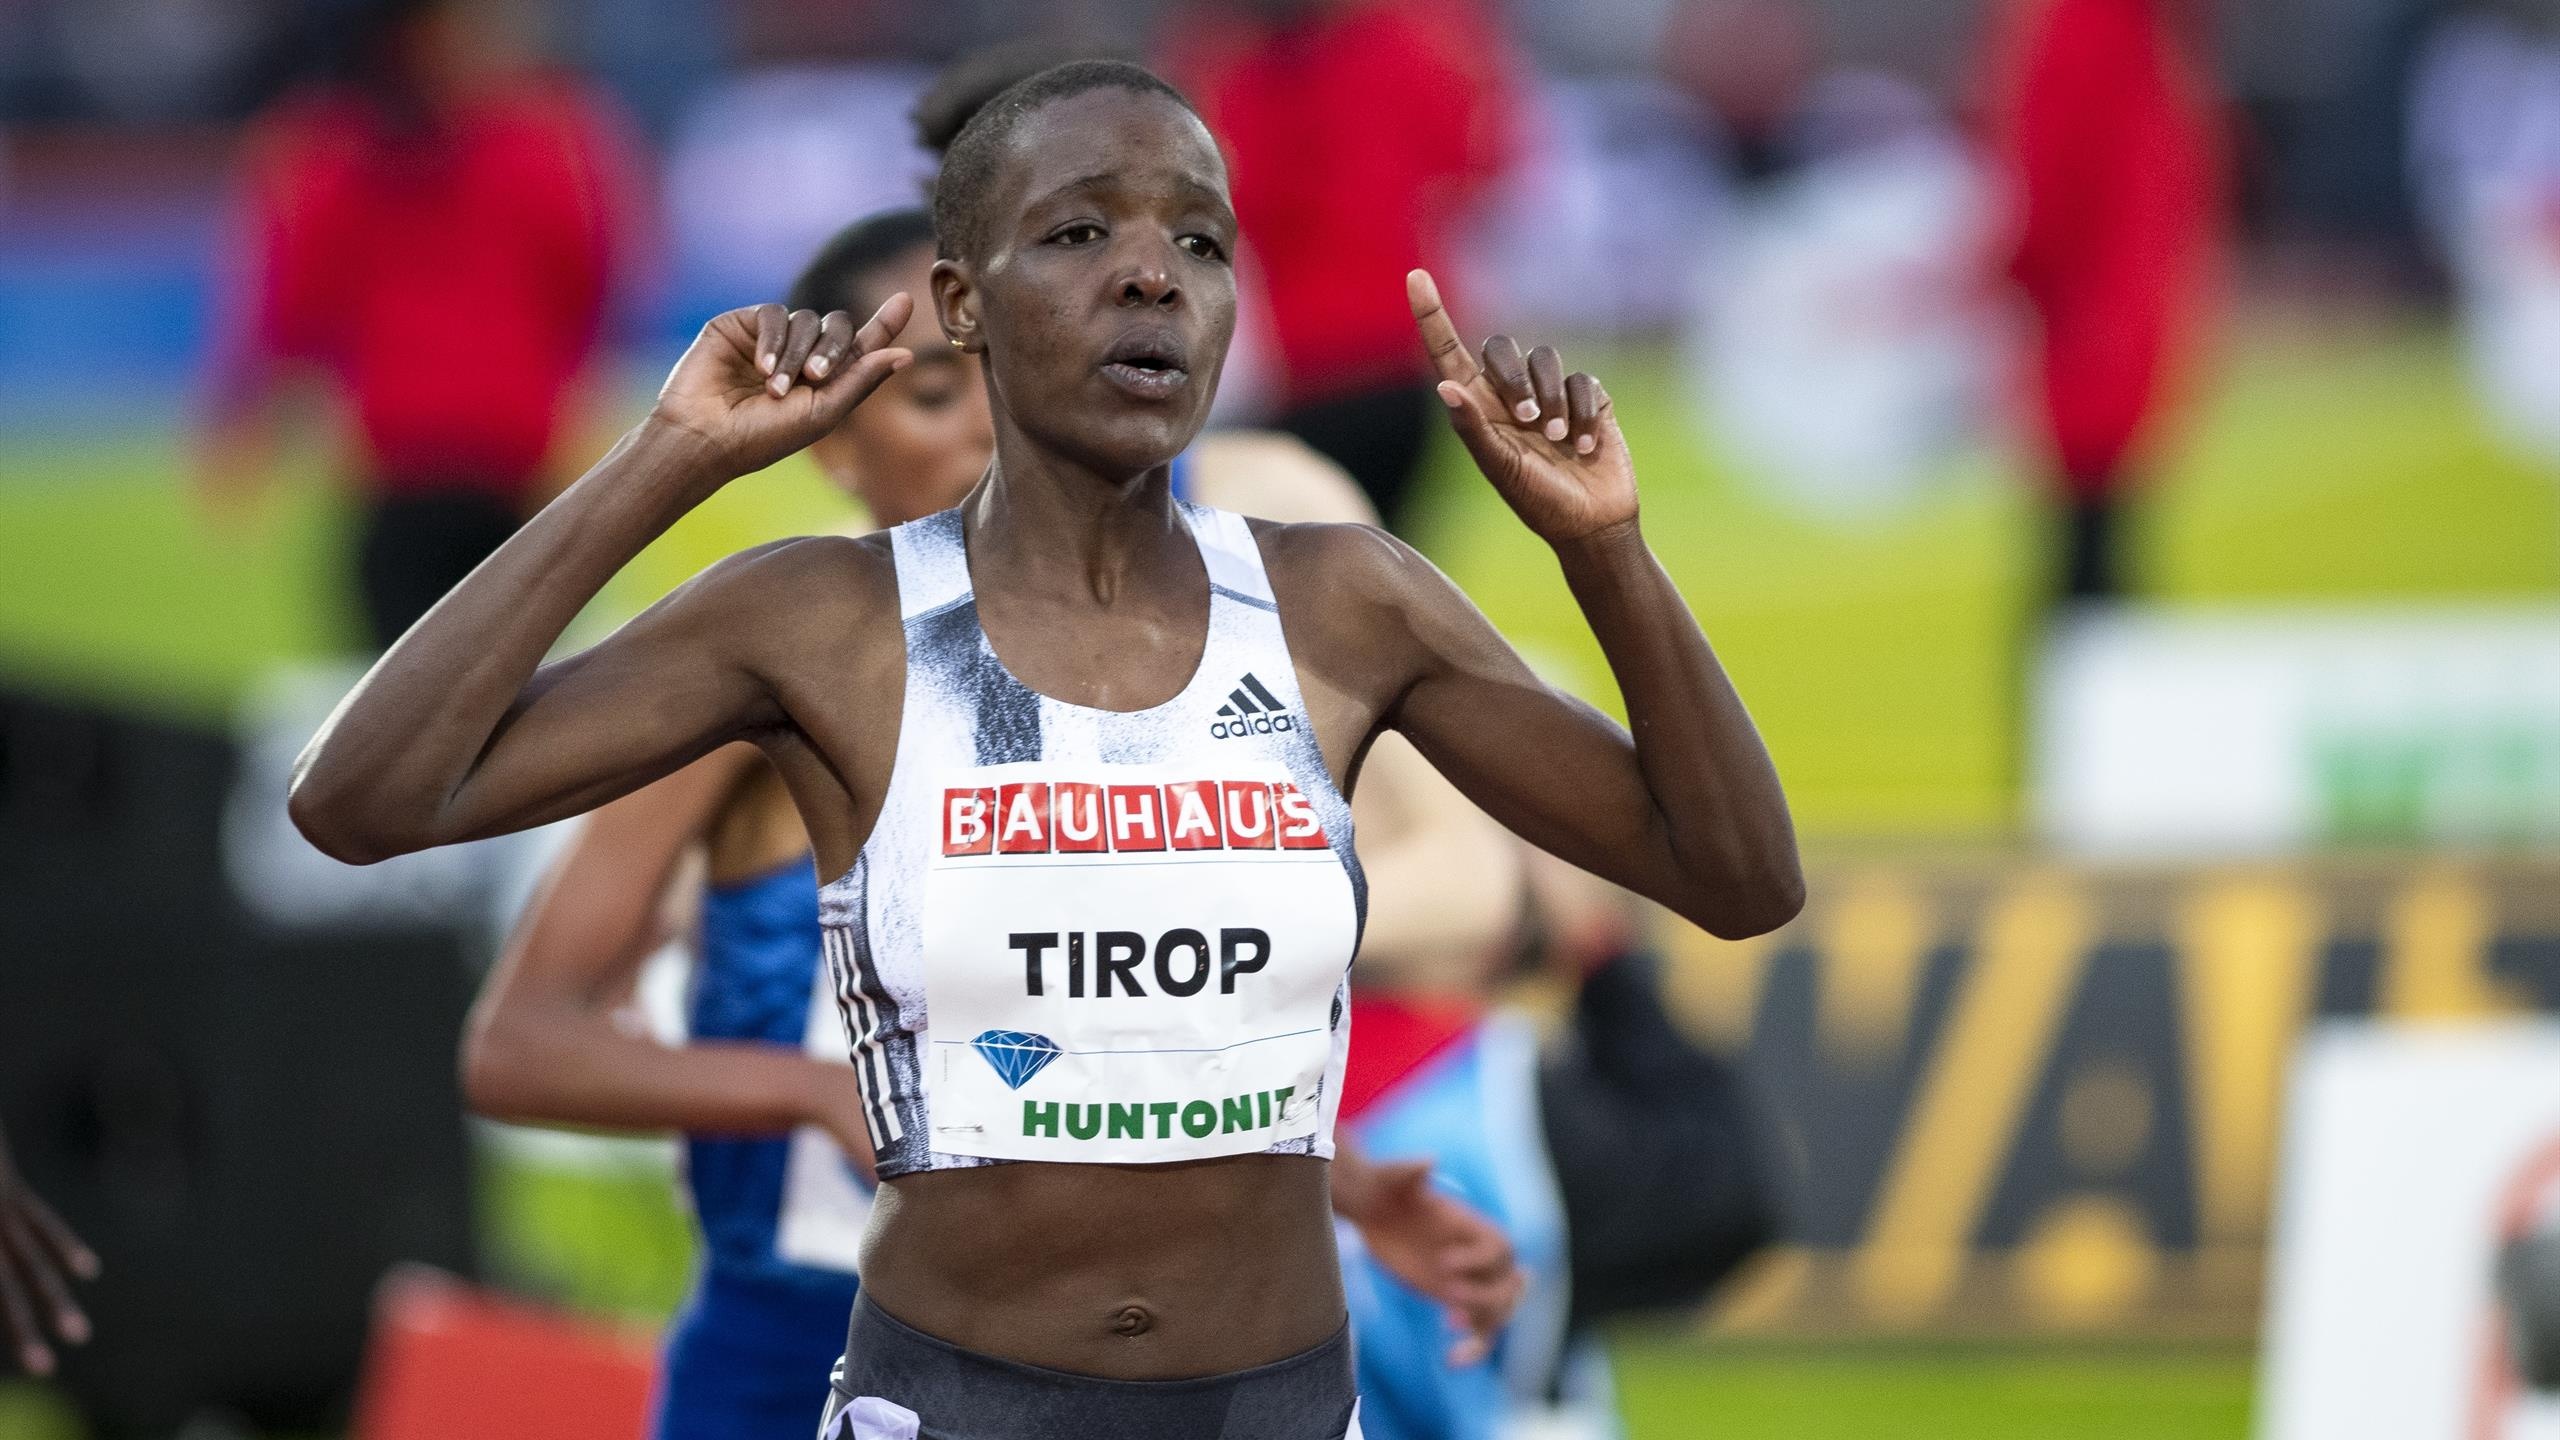 Agnes Tirop, Arrest of husband, Tragic loss, Kenyan athlete's death, 2560x1440 HD Desktop